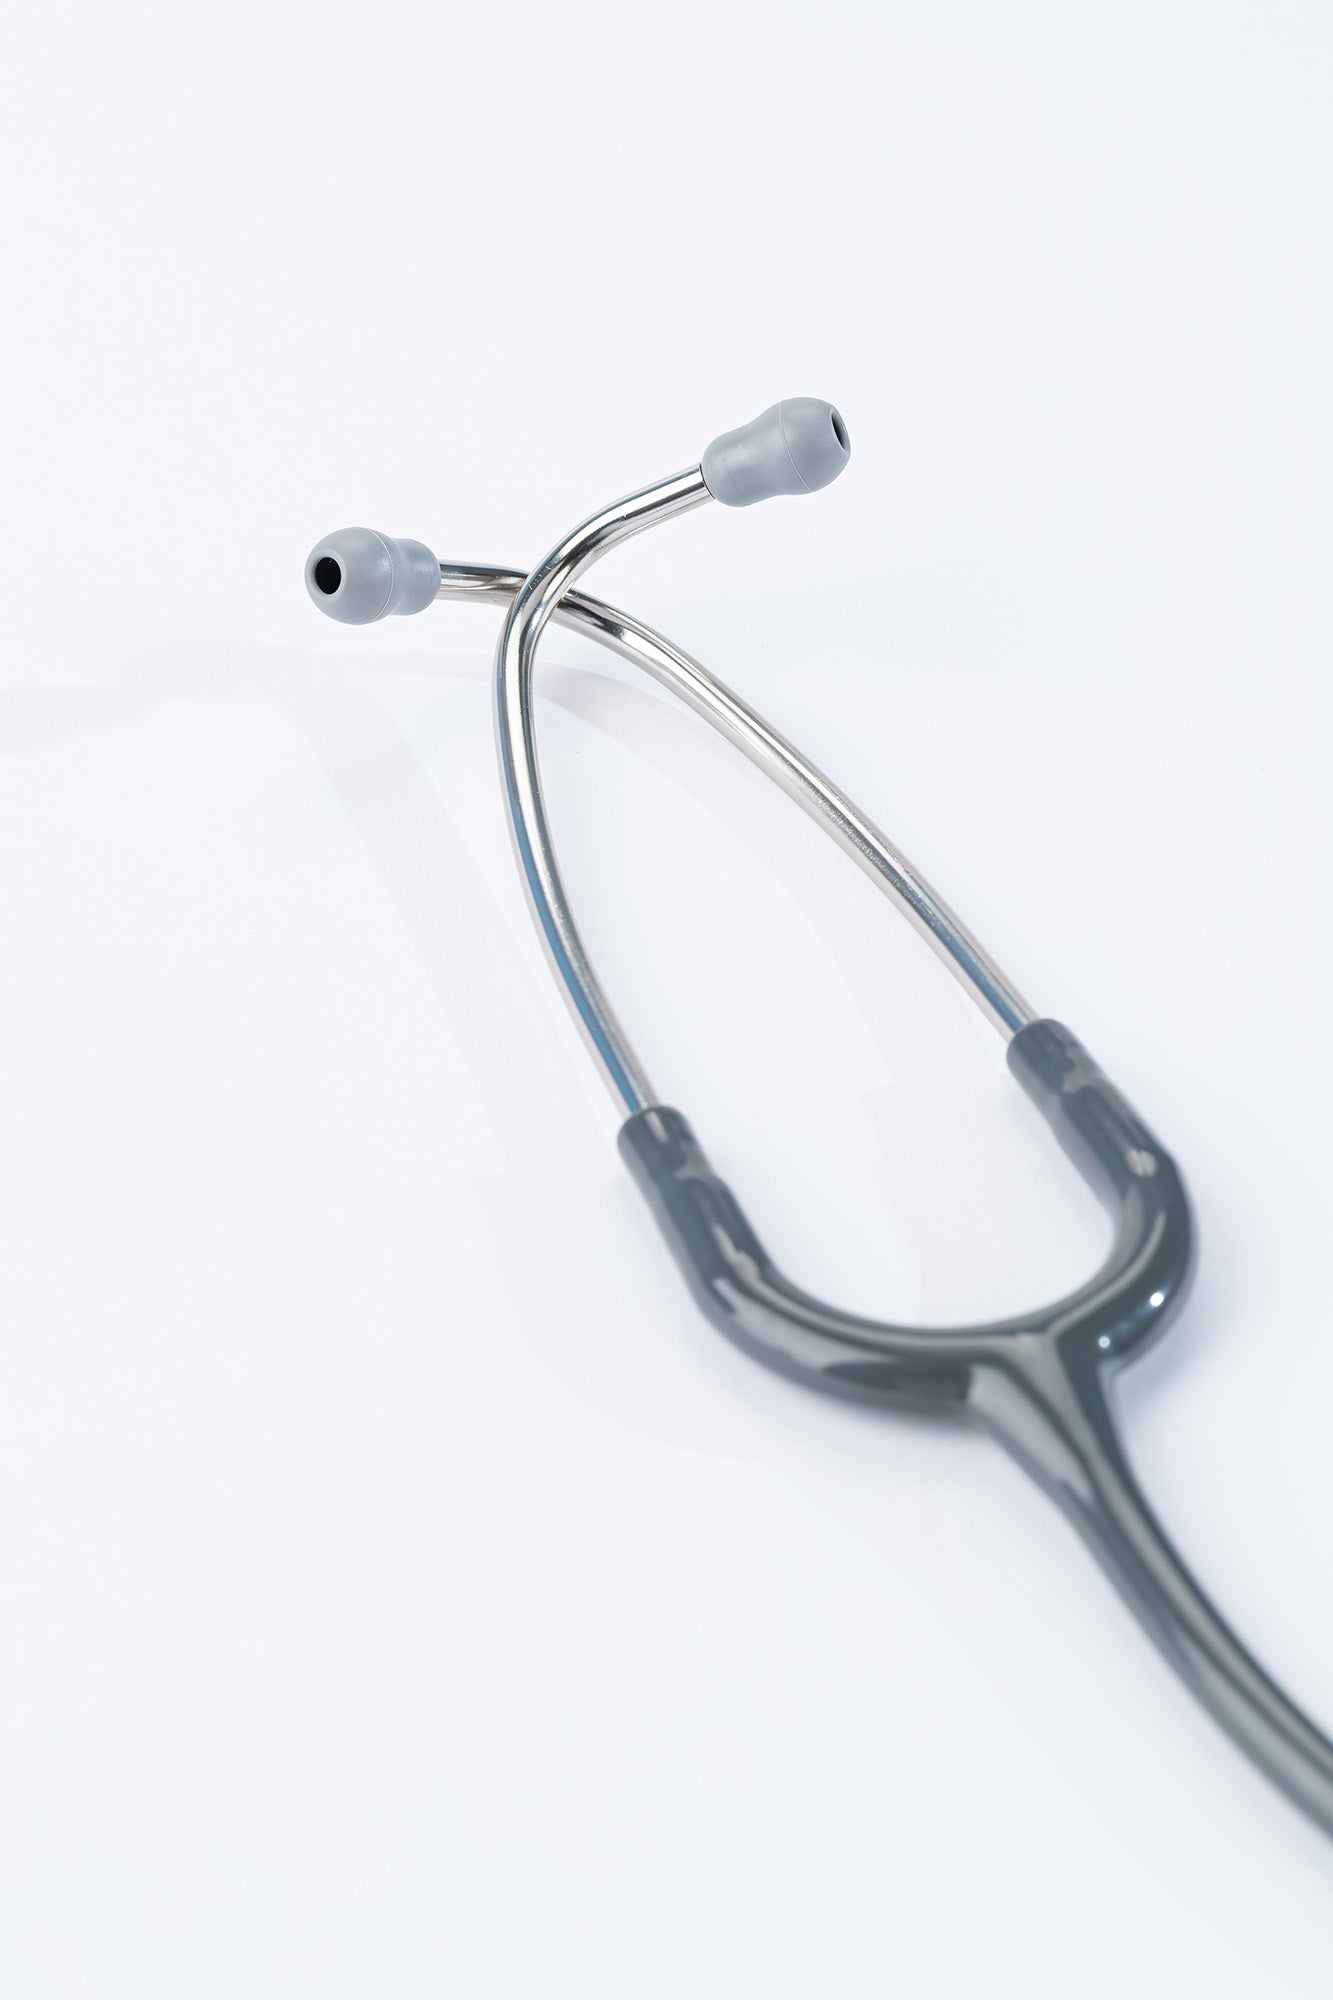 3M™ Littmann® Classic III™ Stethoscope, Gray Tube, 27 inch, 5621